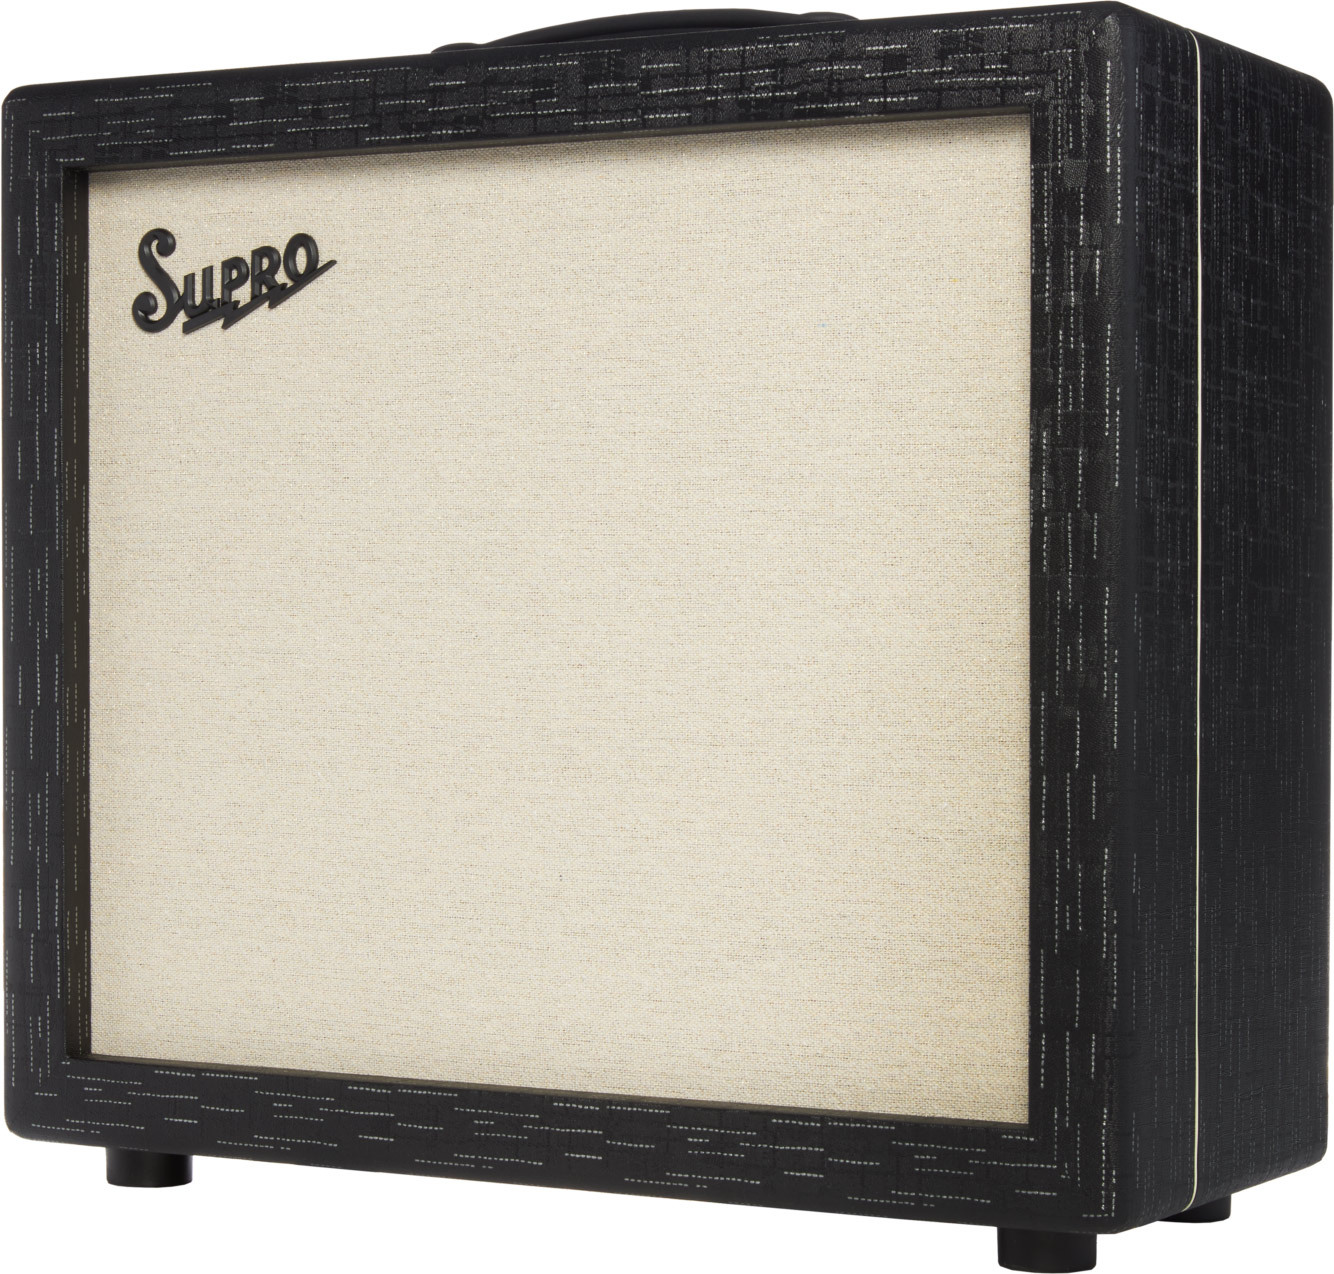 Supro Royale 1x12 Guitar Cab 1732 1x12 75w 8-ohms Black Scandia - Electric guitar amp cabinet - Main picture